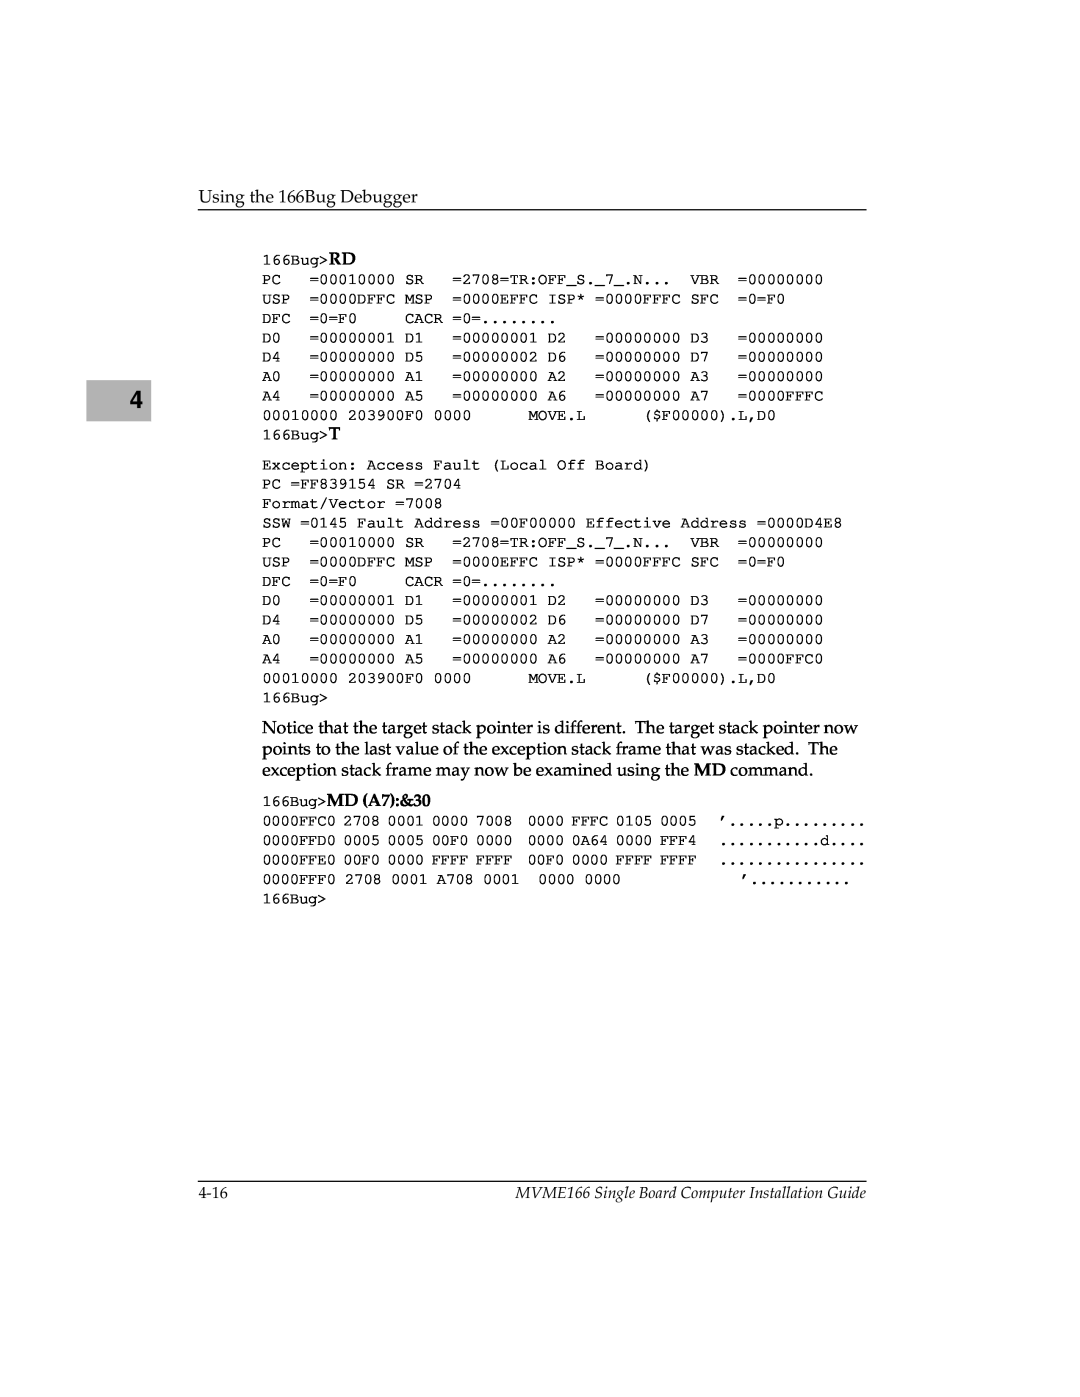 Motorola MVME166IG/D2, MVME166D2 manual 166BugMD A7&30, MVME166 Single Board Computer Installation Guide, ’.....p 